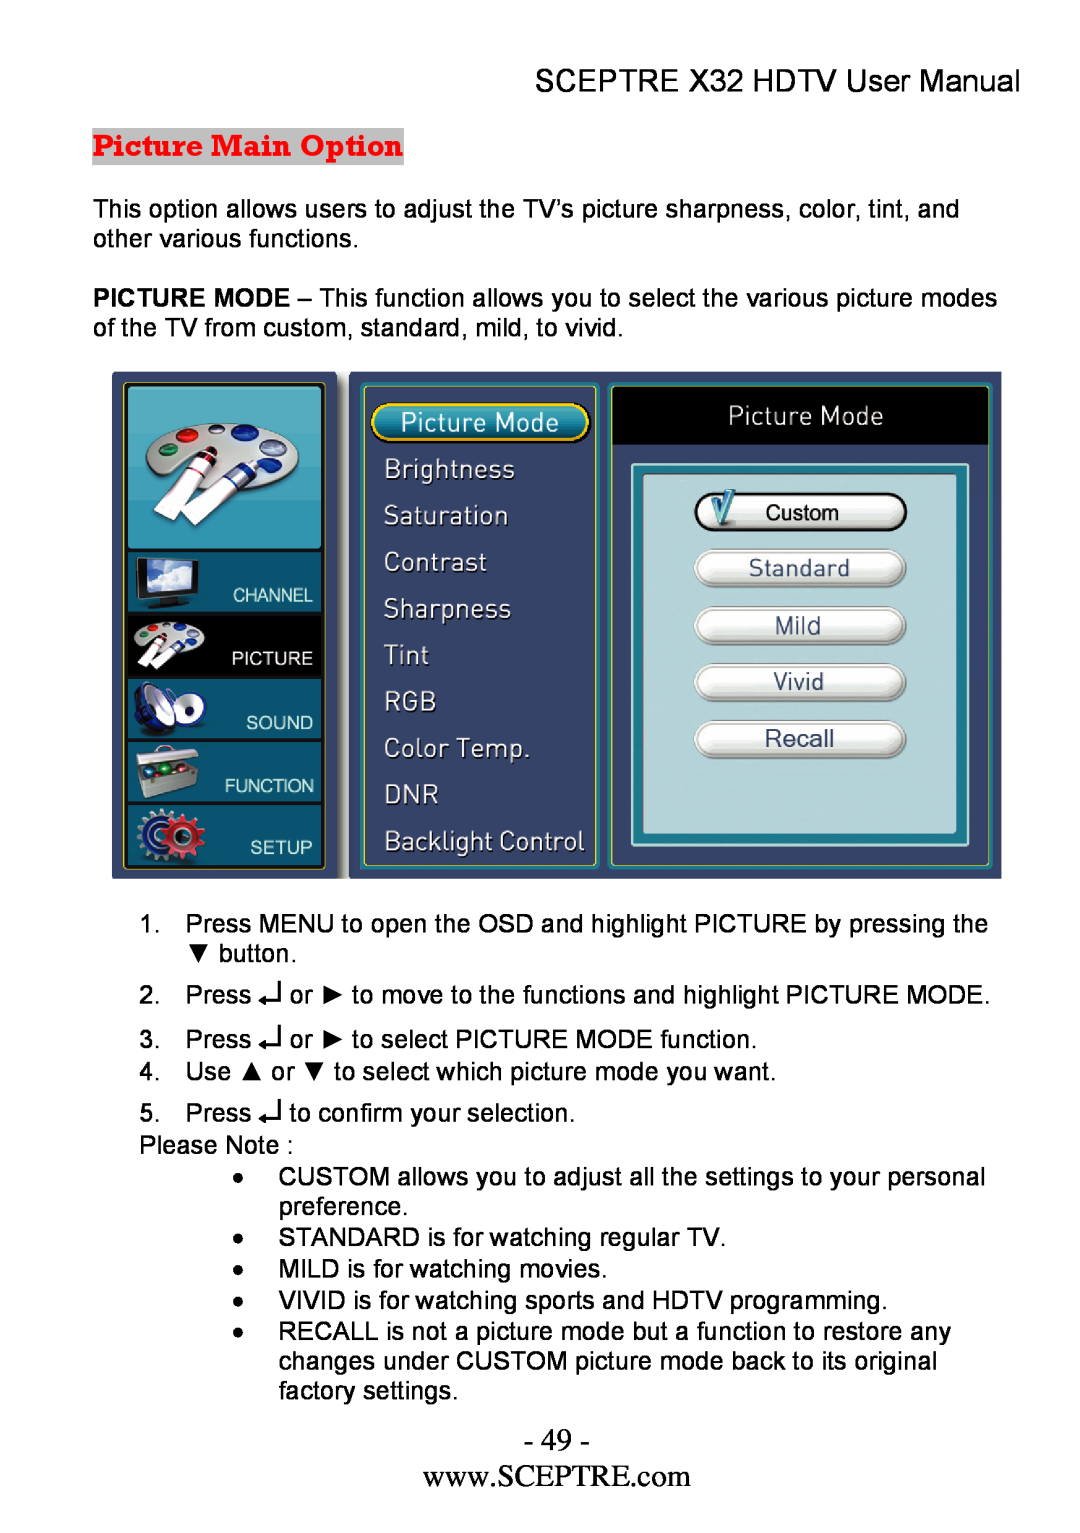 Sceptre Technologies x32 user manual Picture Main Option, SCEPTRE X32 HDTV User Manual 